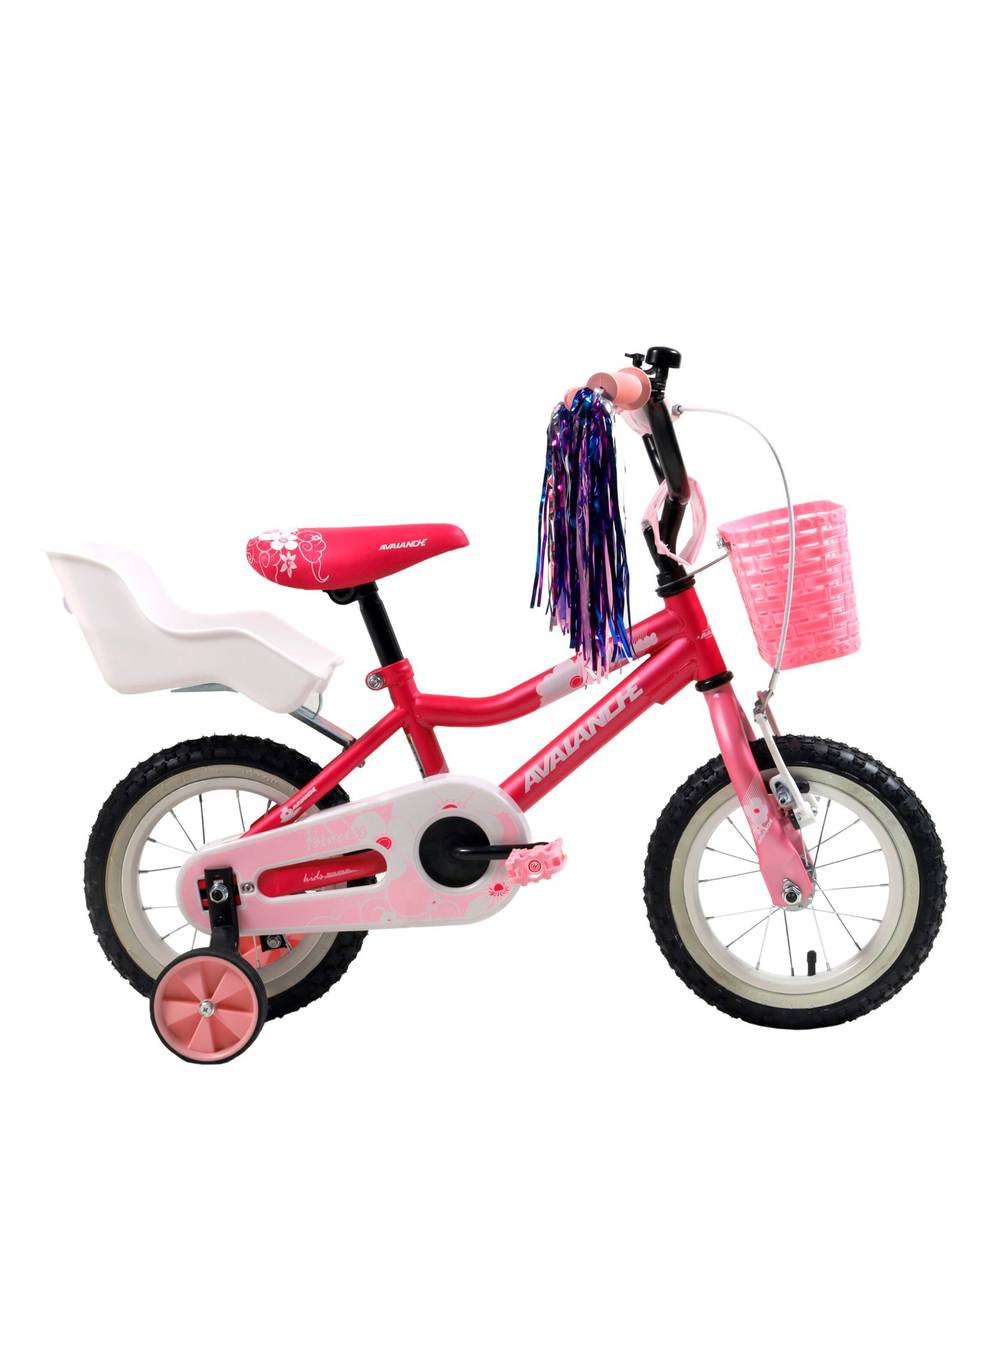 Avalanche bicicleta infantil pincess aro 12" rosado (1 u)